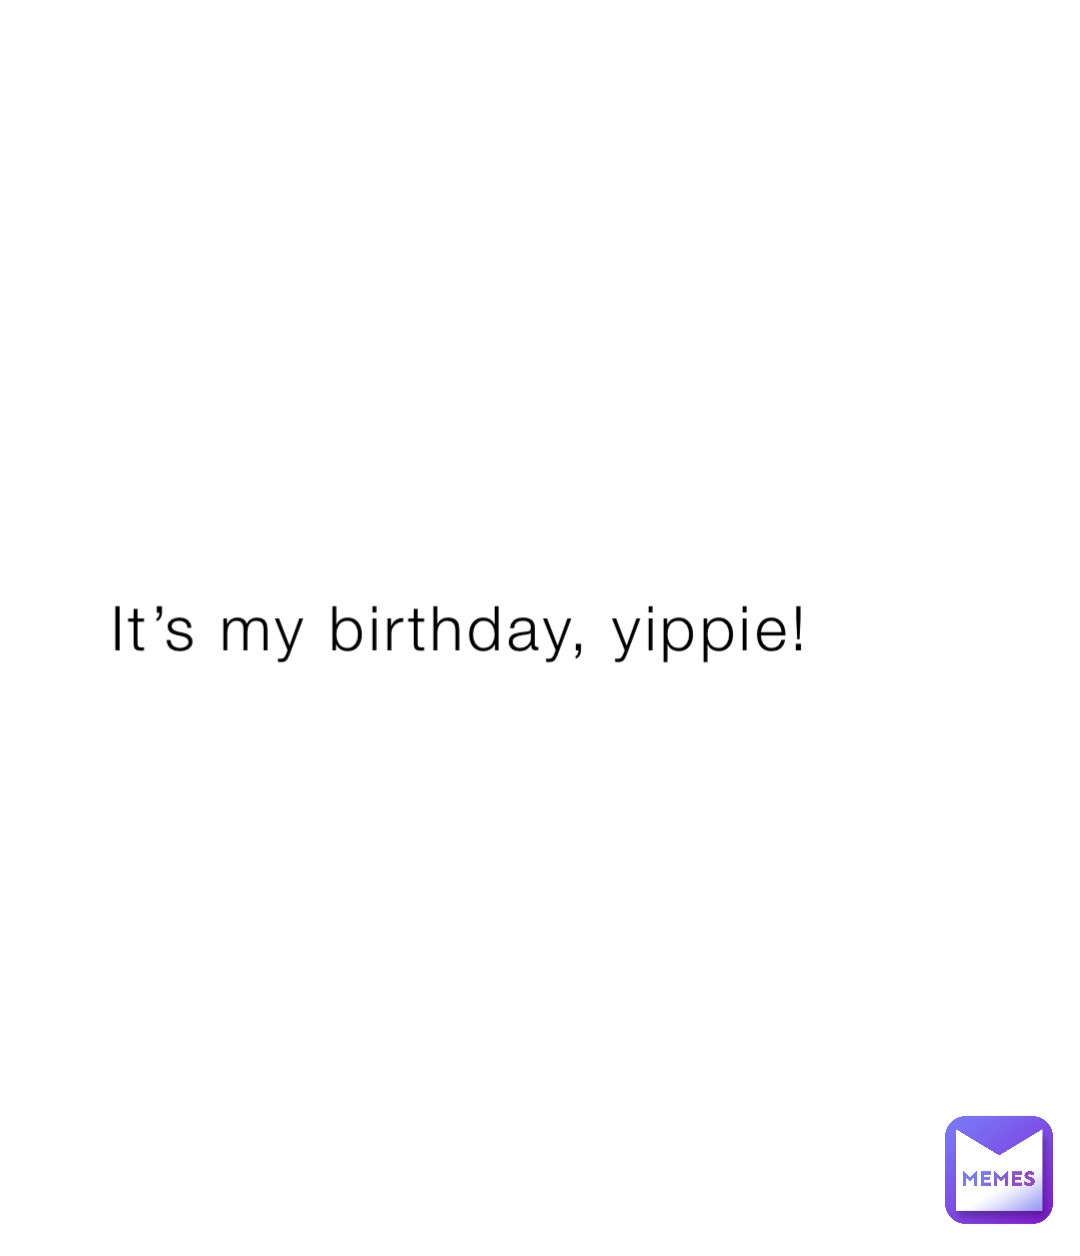 It’s my birthday, yippie!